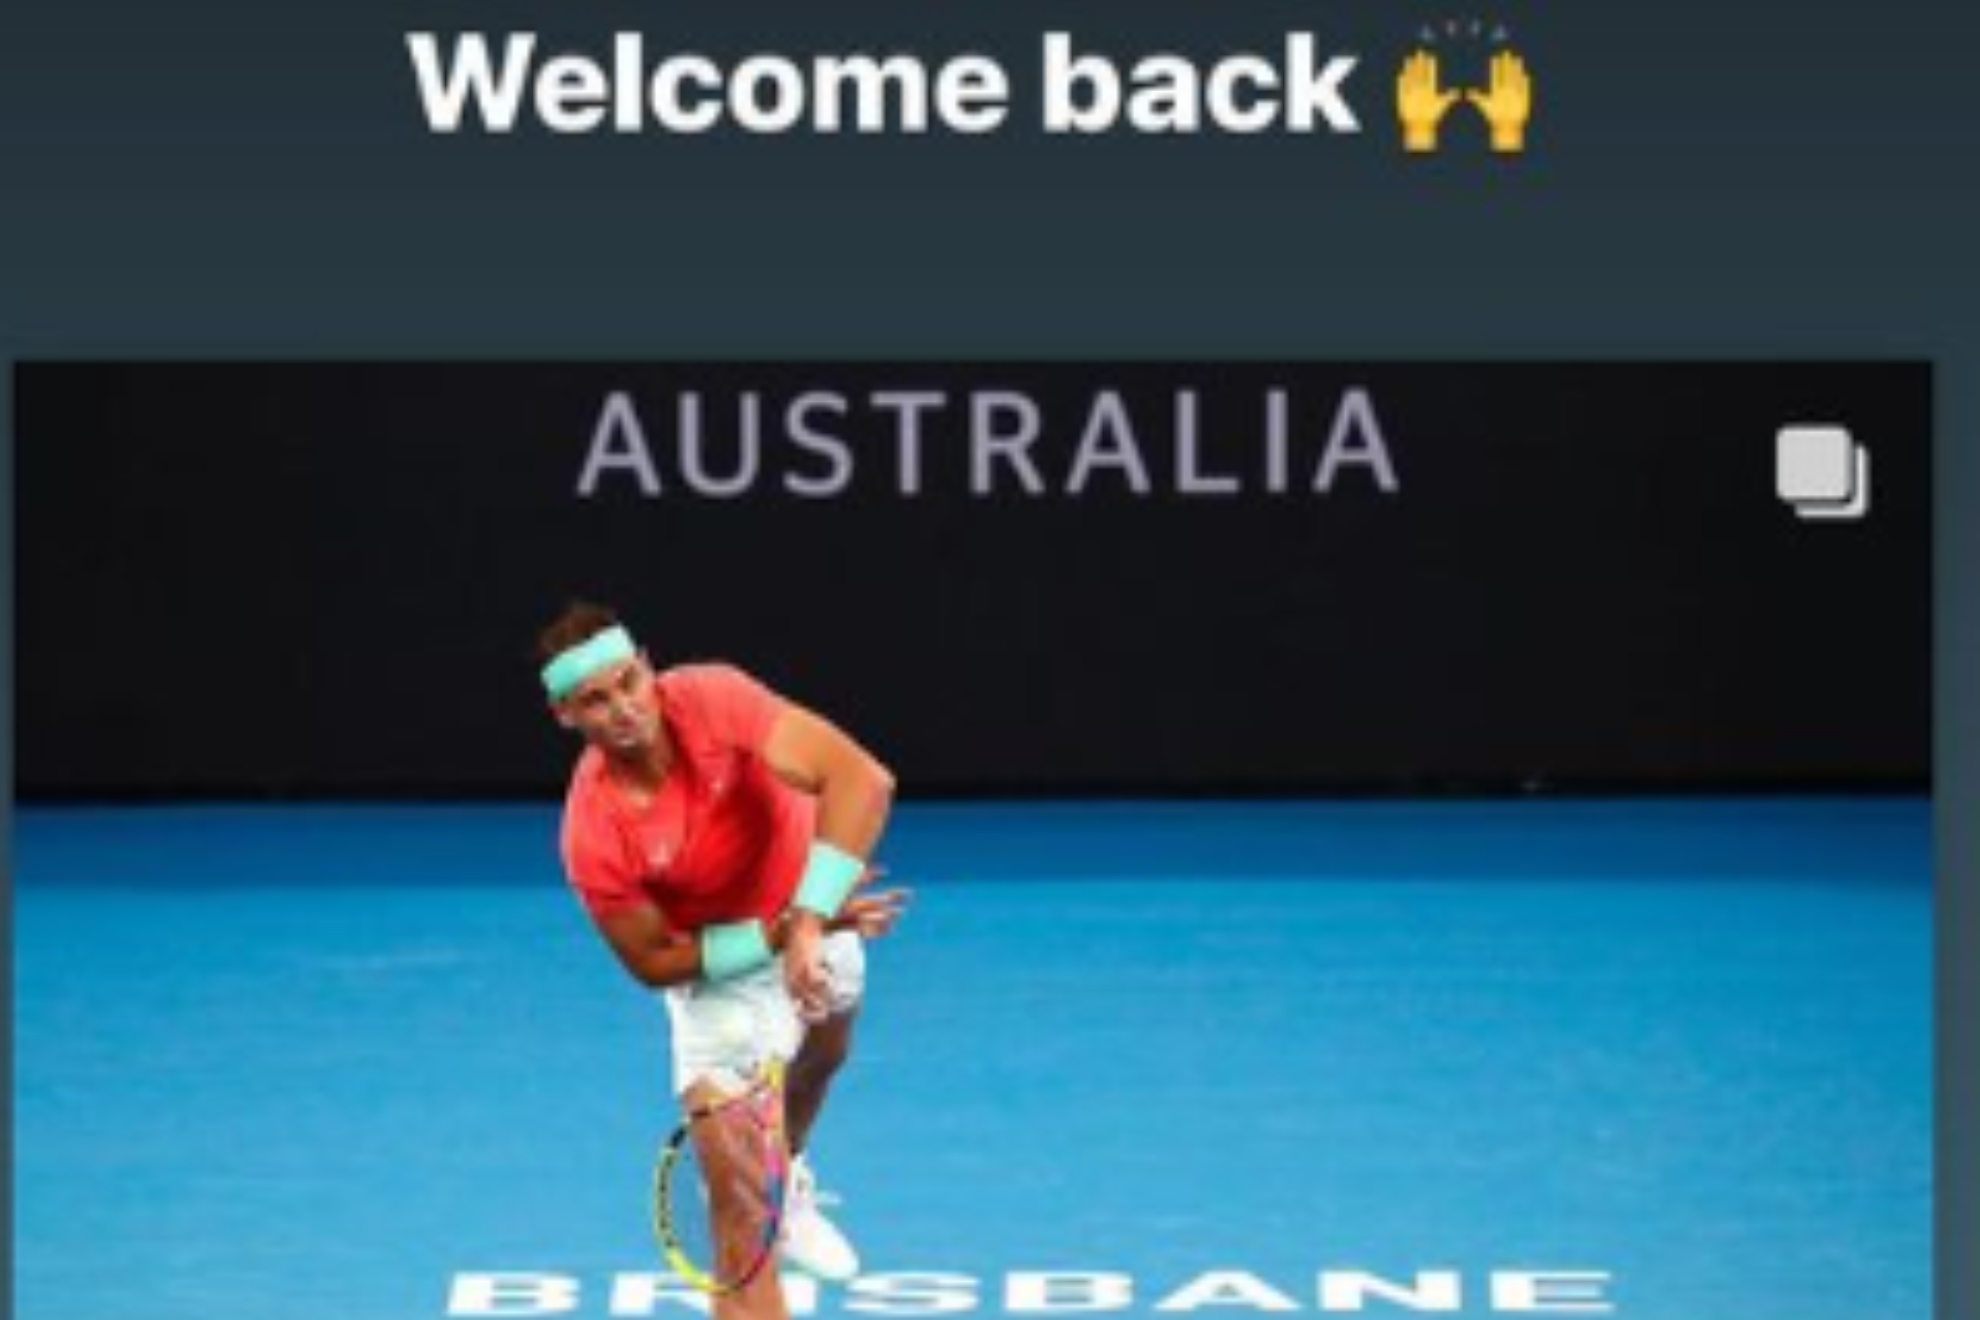 Djokovic welcomes back Nadal on instagram